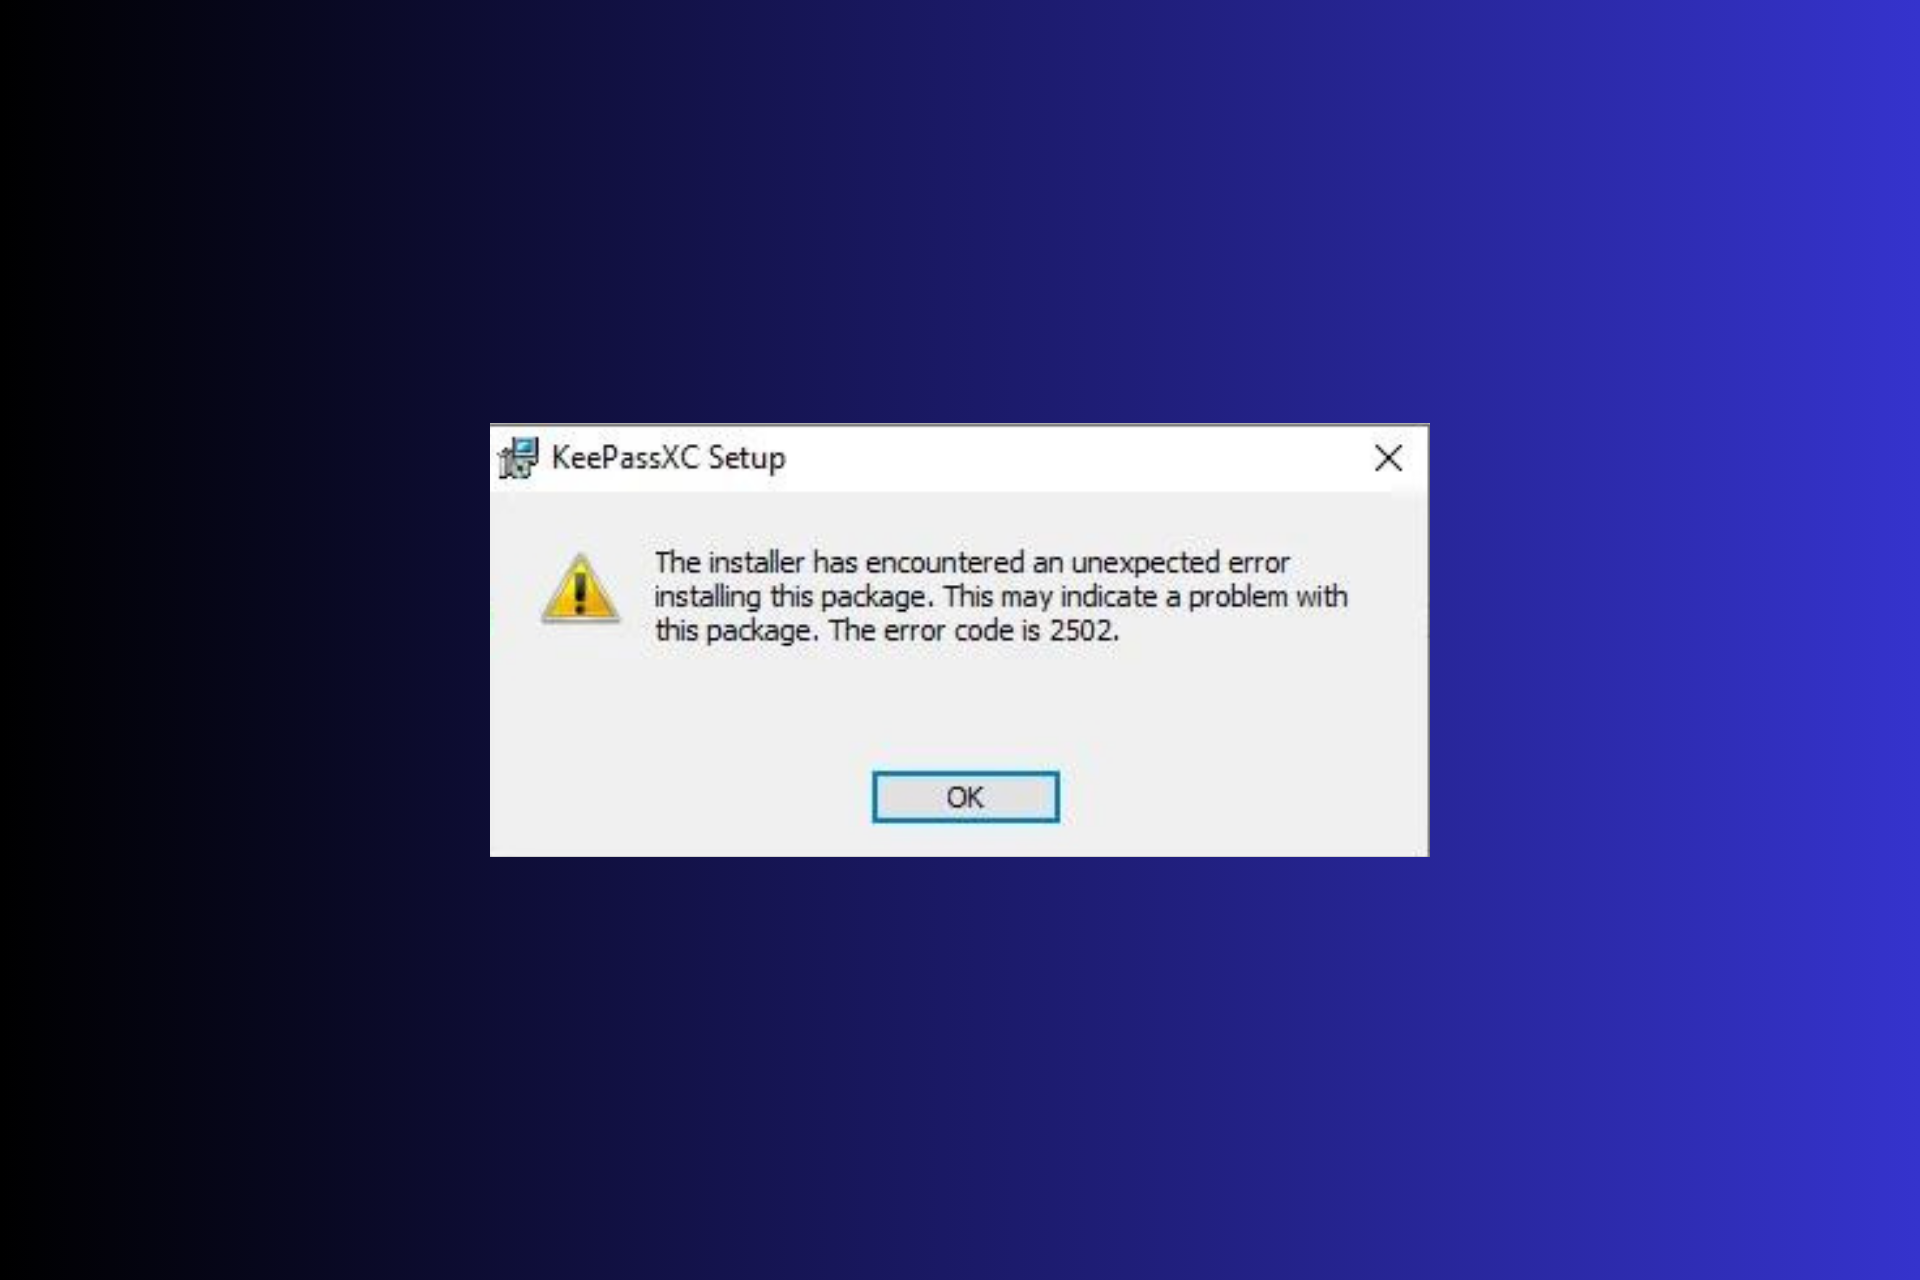 Epic Games Launcher Login Errors on Windows 11/10 [Solution] 